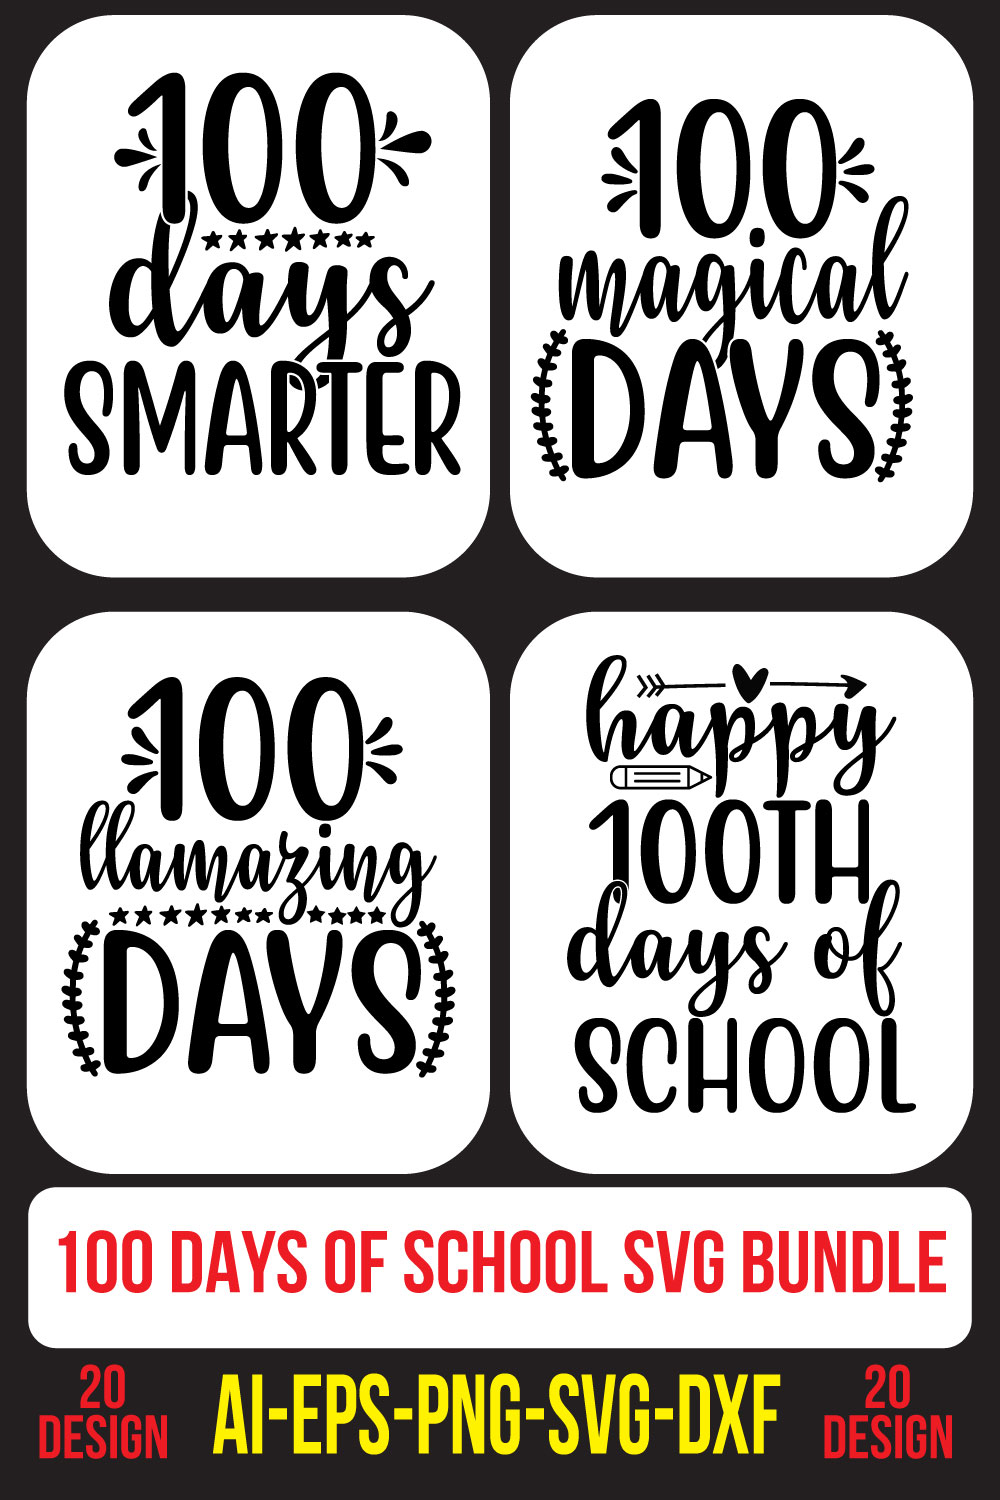 100 days of school SVG Bundle pinterest preview image.